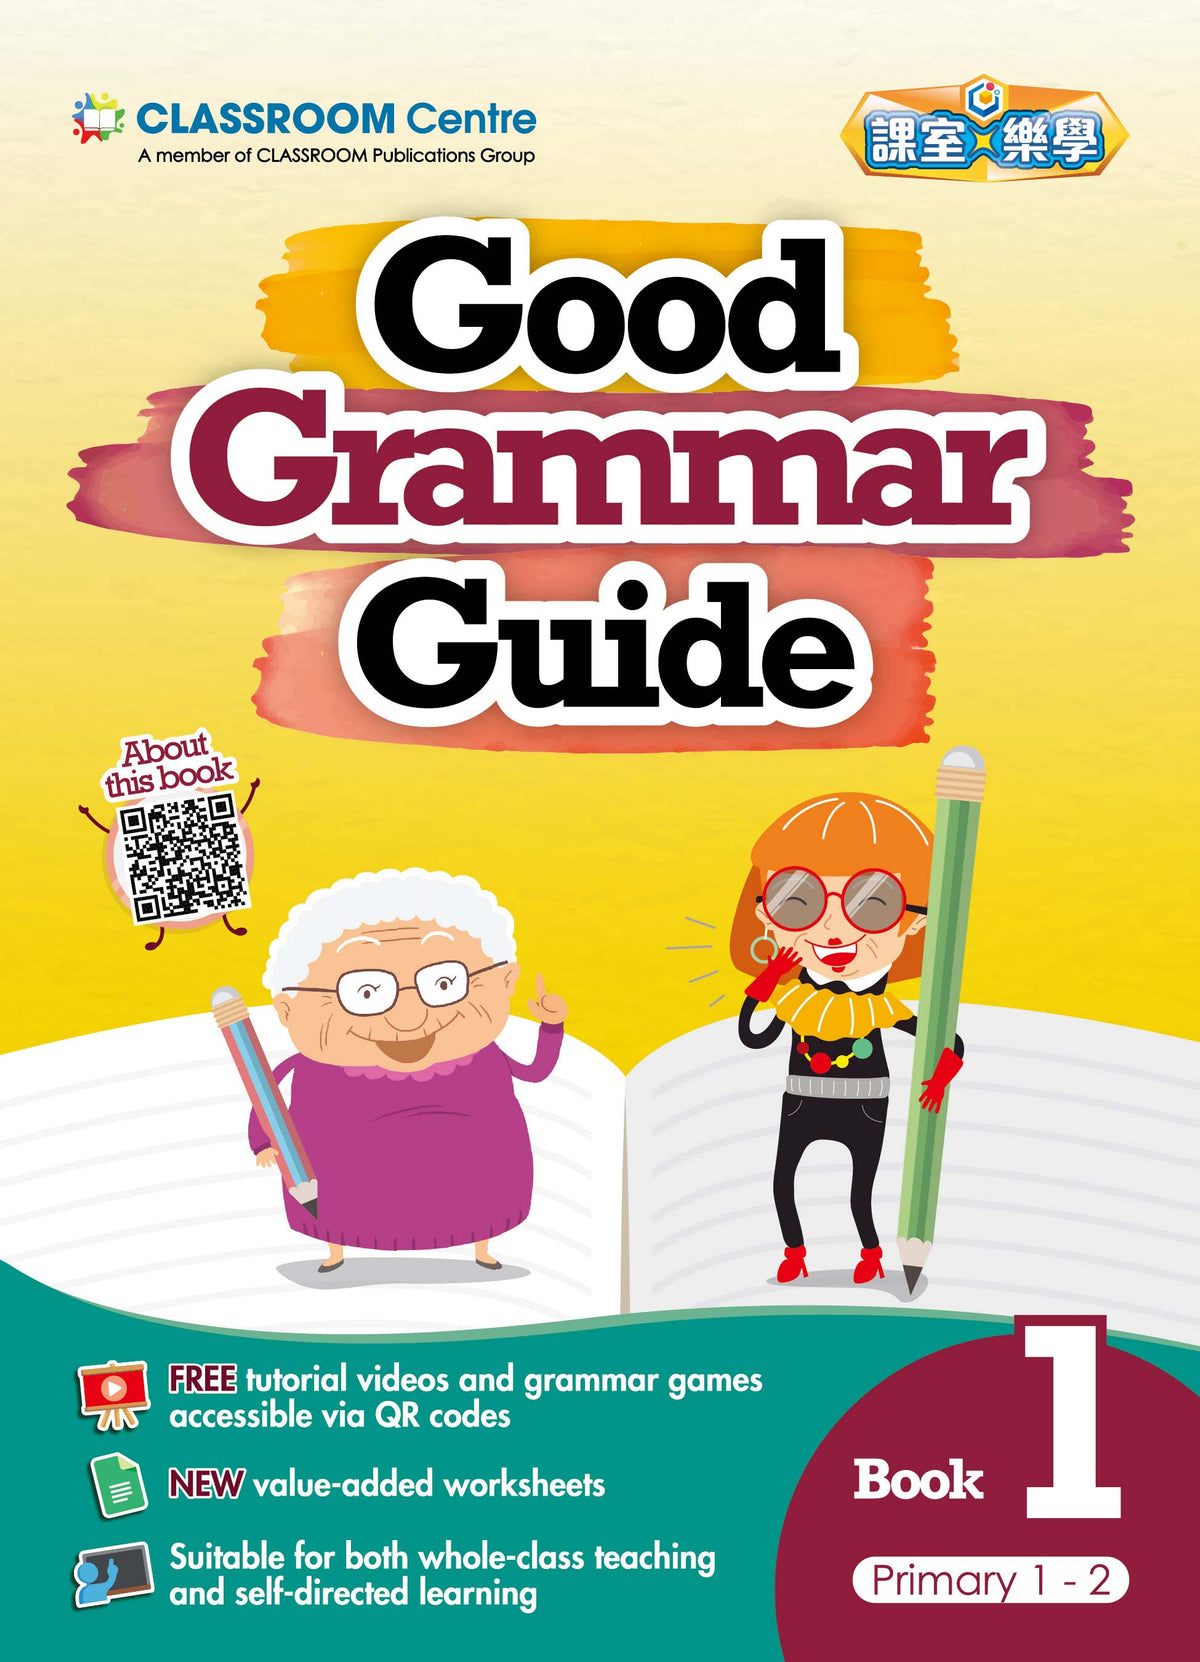 Guide　Primary　CLASSROOM　eShop　Edition)　—　Grammar　Good　CLASSROOM　(2020